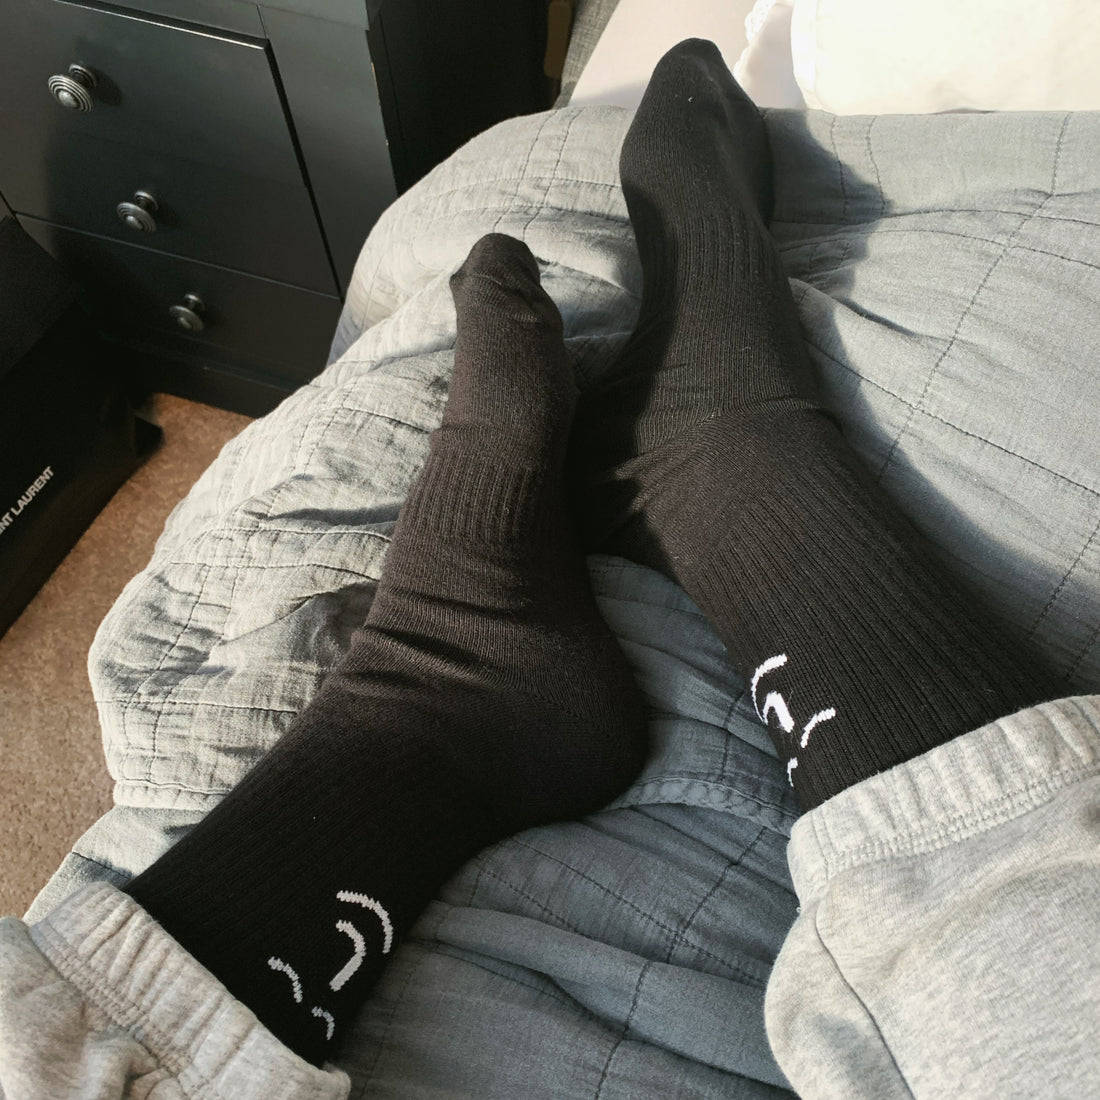 Ecofriendly Leiho socks